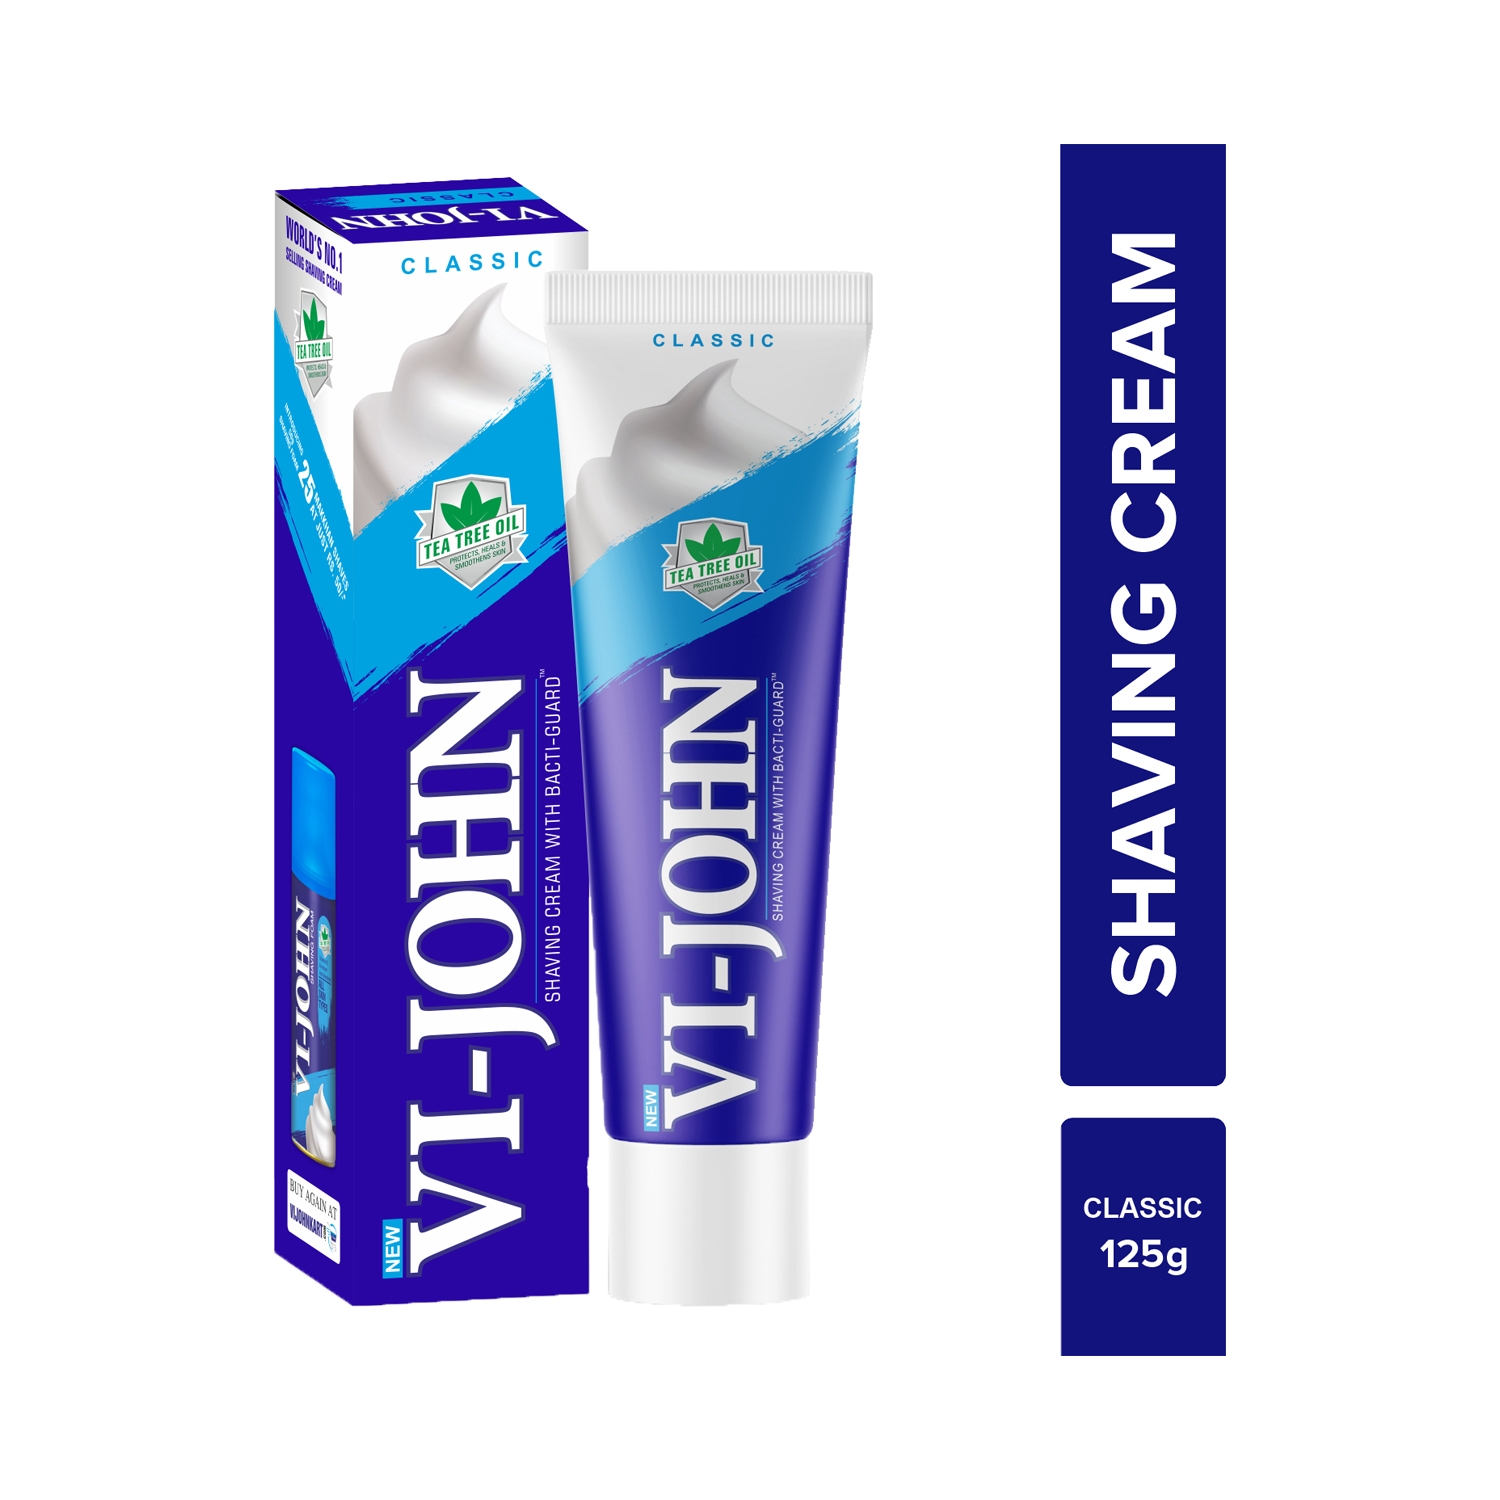 VI-JOHN Classic Shaving Cream With Tea Tree Oil & Bacti-Guard (125g)